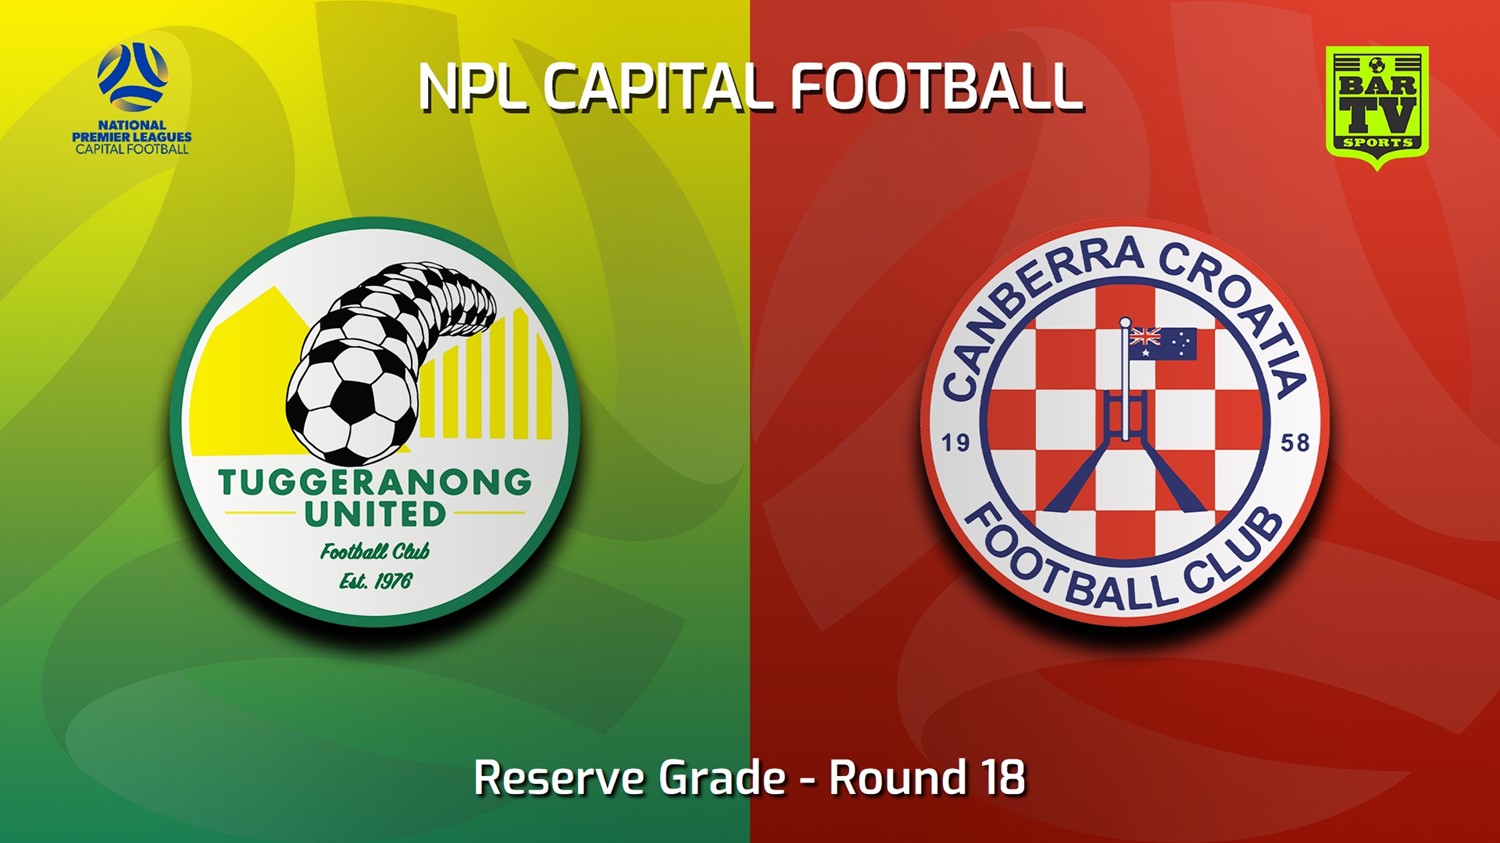 230813-NPL Women - Reserve Grade - Capital Football Round 18 - Tuggeranong United FC (women) v Canberra Croatia FC (women) Minigame Slate Image